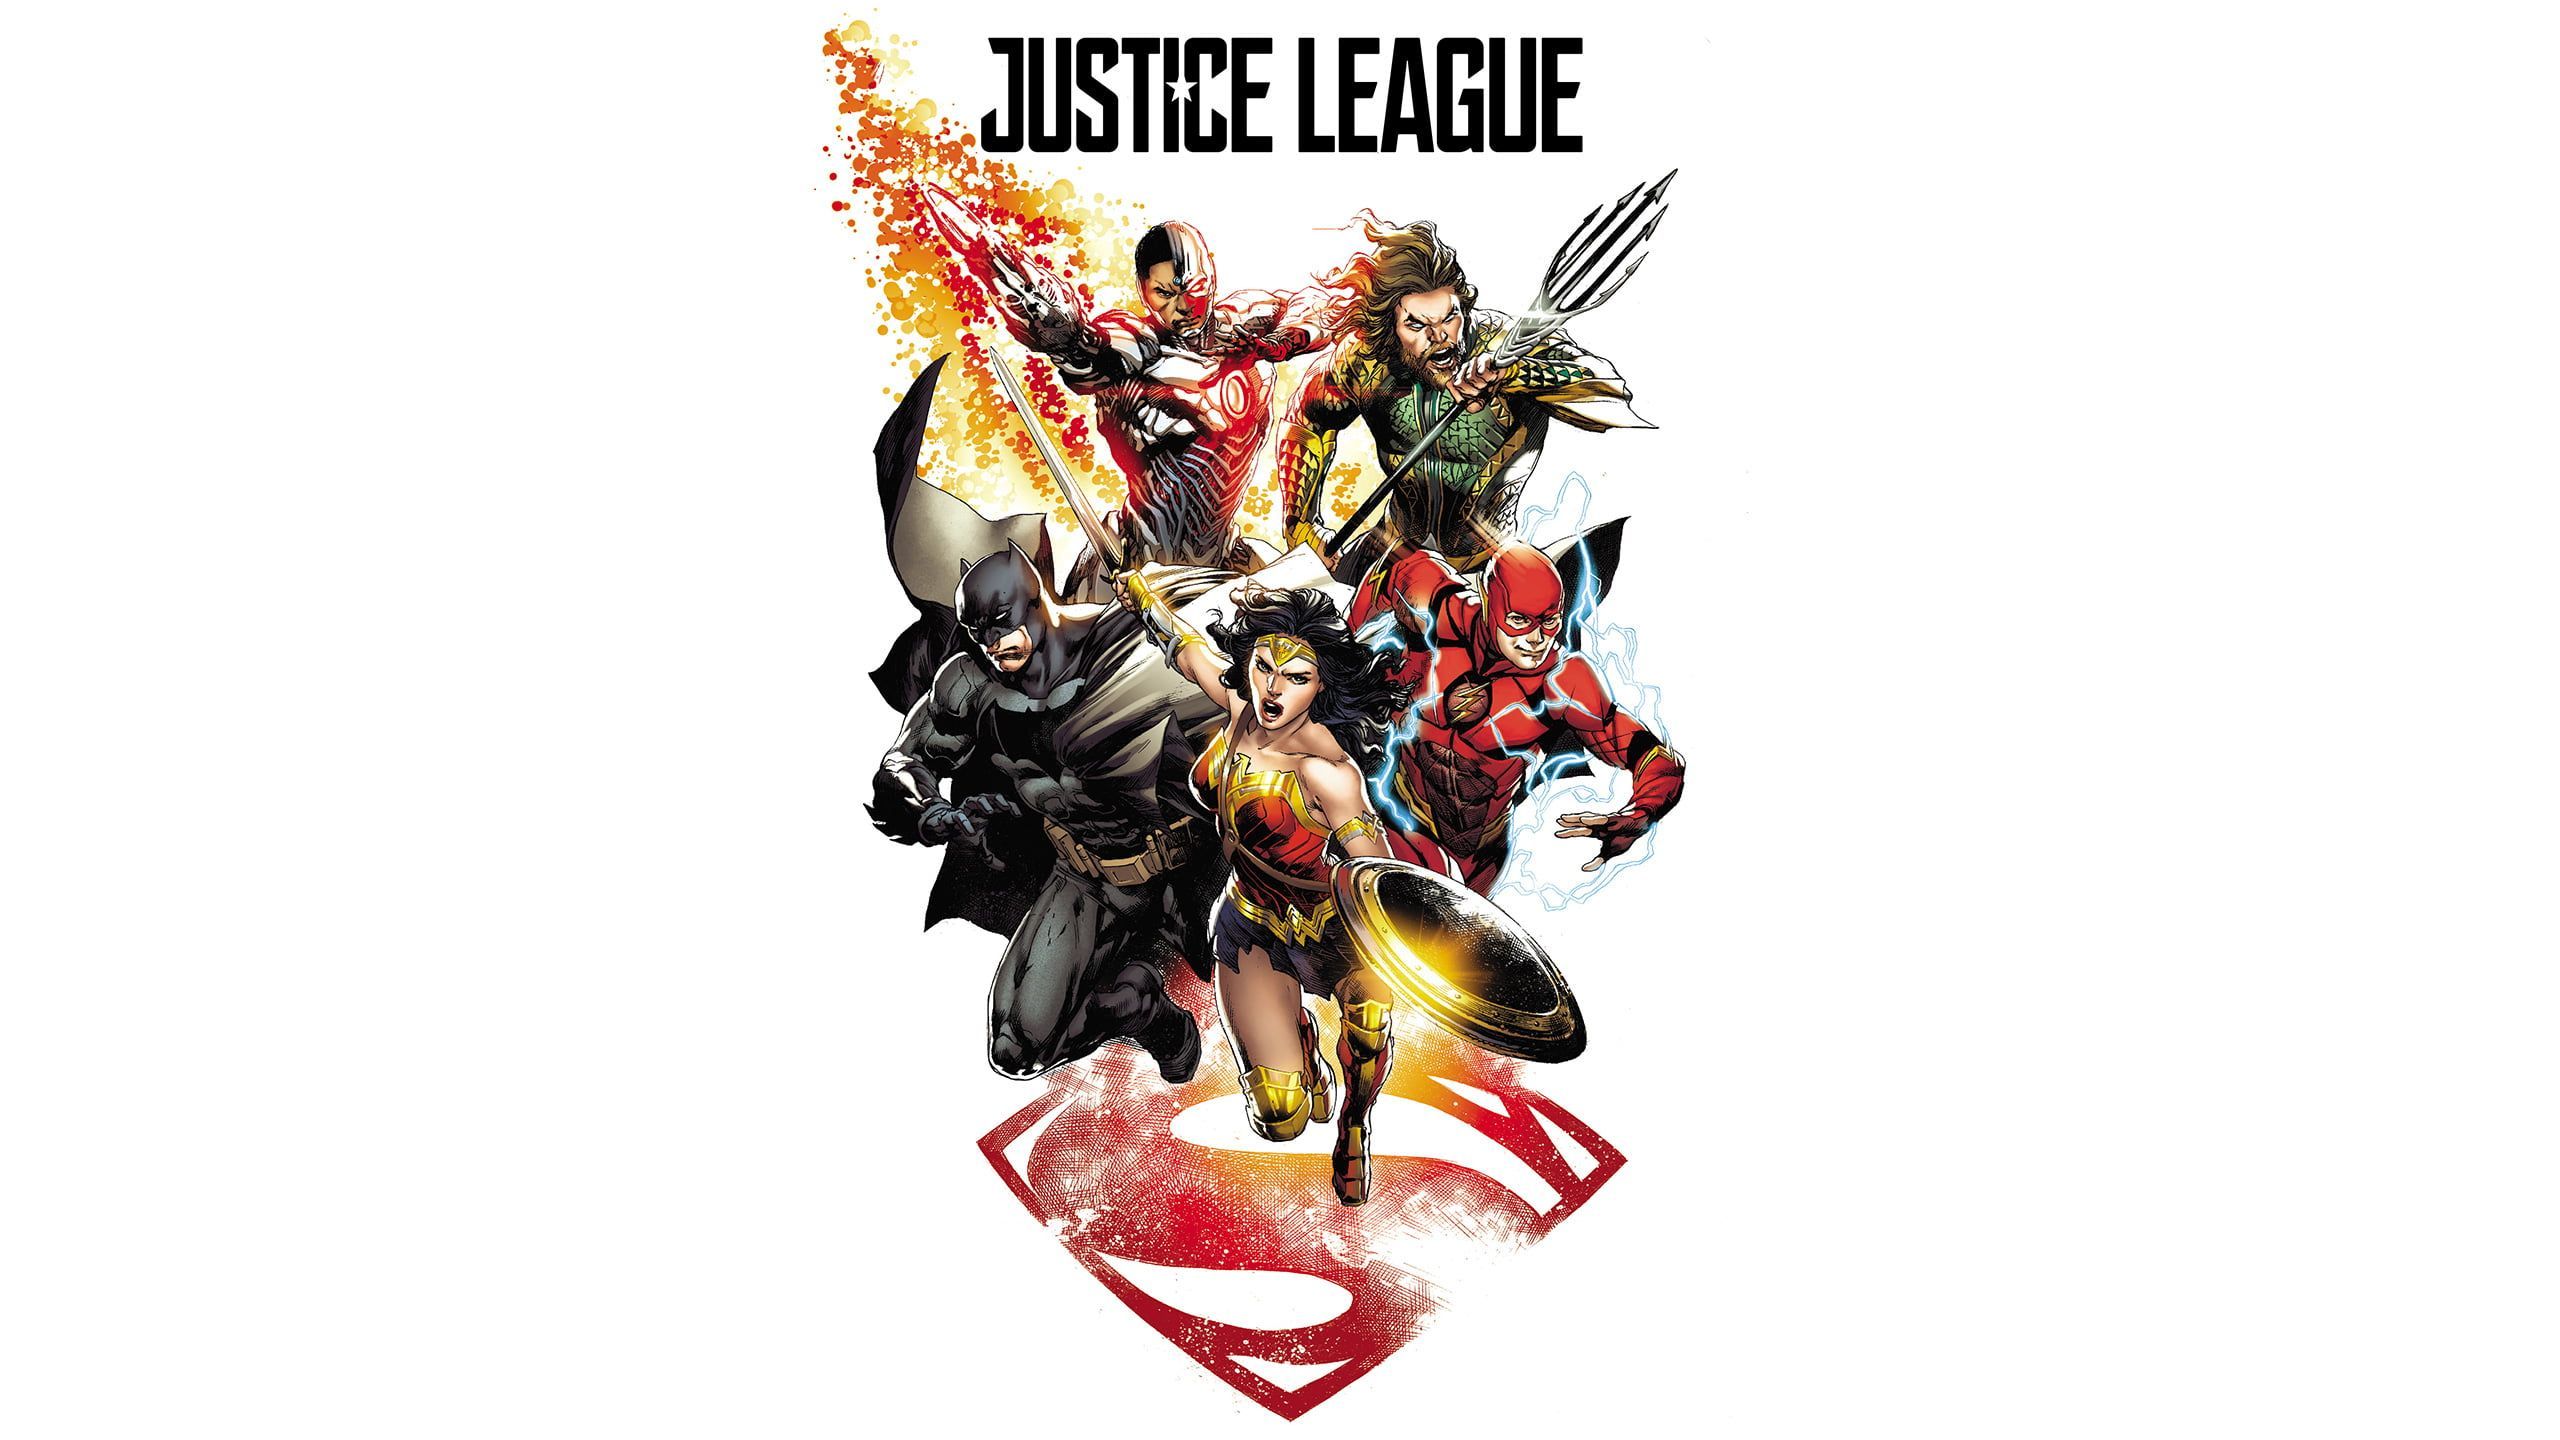 justice league #superheroes #hd #comics #art digital art #batman #cyborg #flash wonder woman #aquaman K #wallp. Hero wallpaper, Justice league, Batman wallpaper